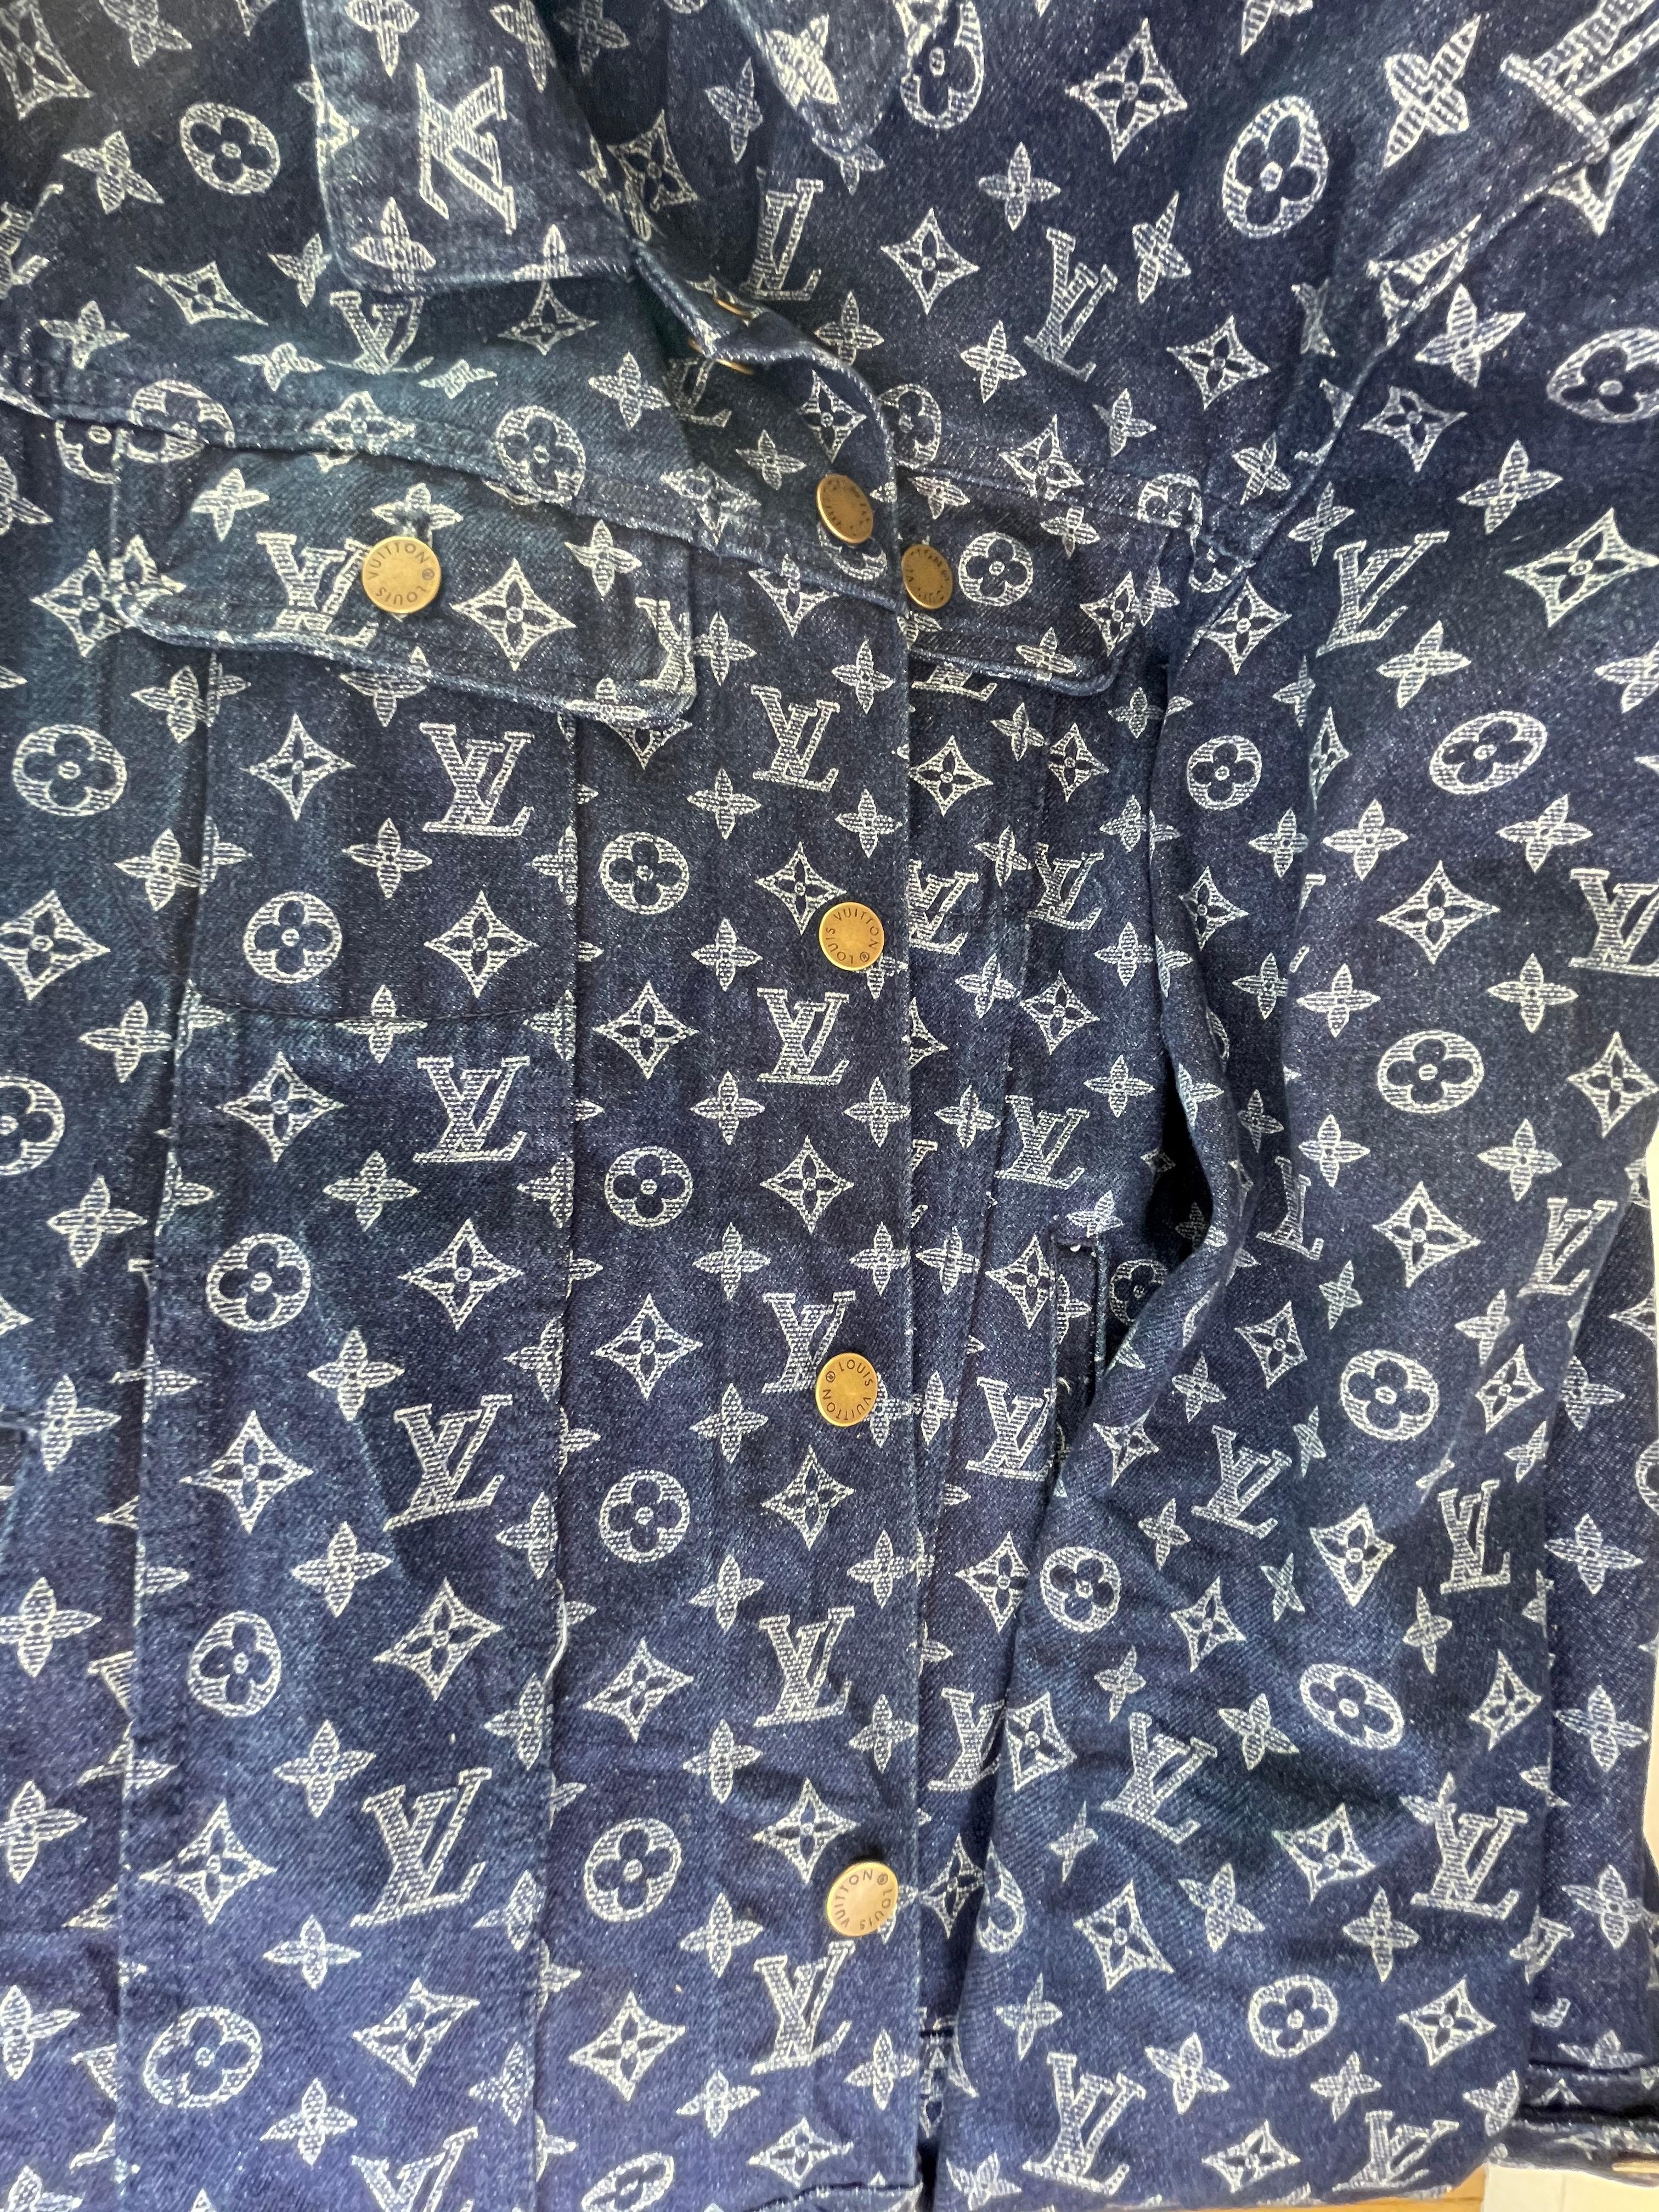 Louis Vuitton Kim Jones Monogram Denim Jacket (Large) 1